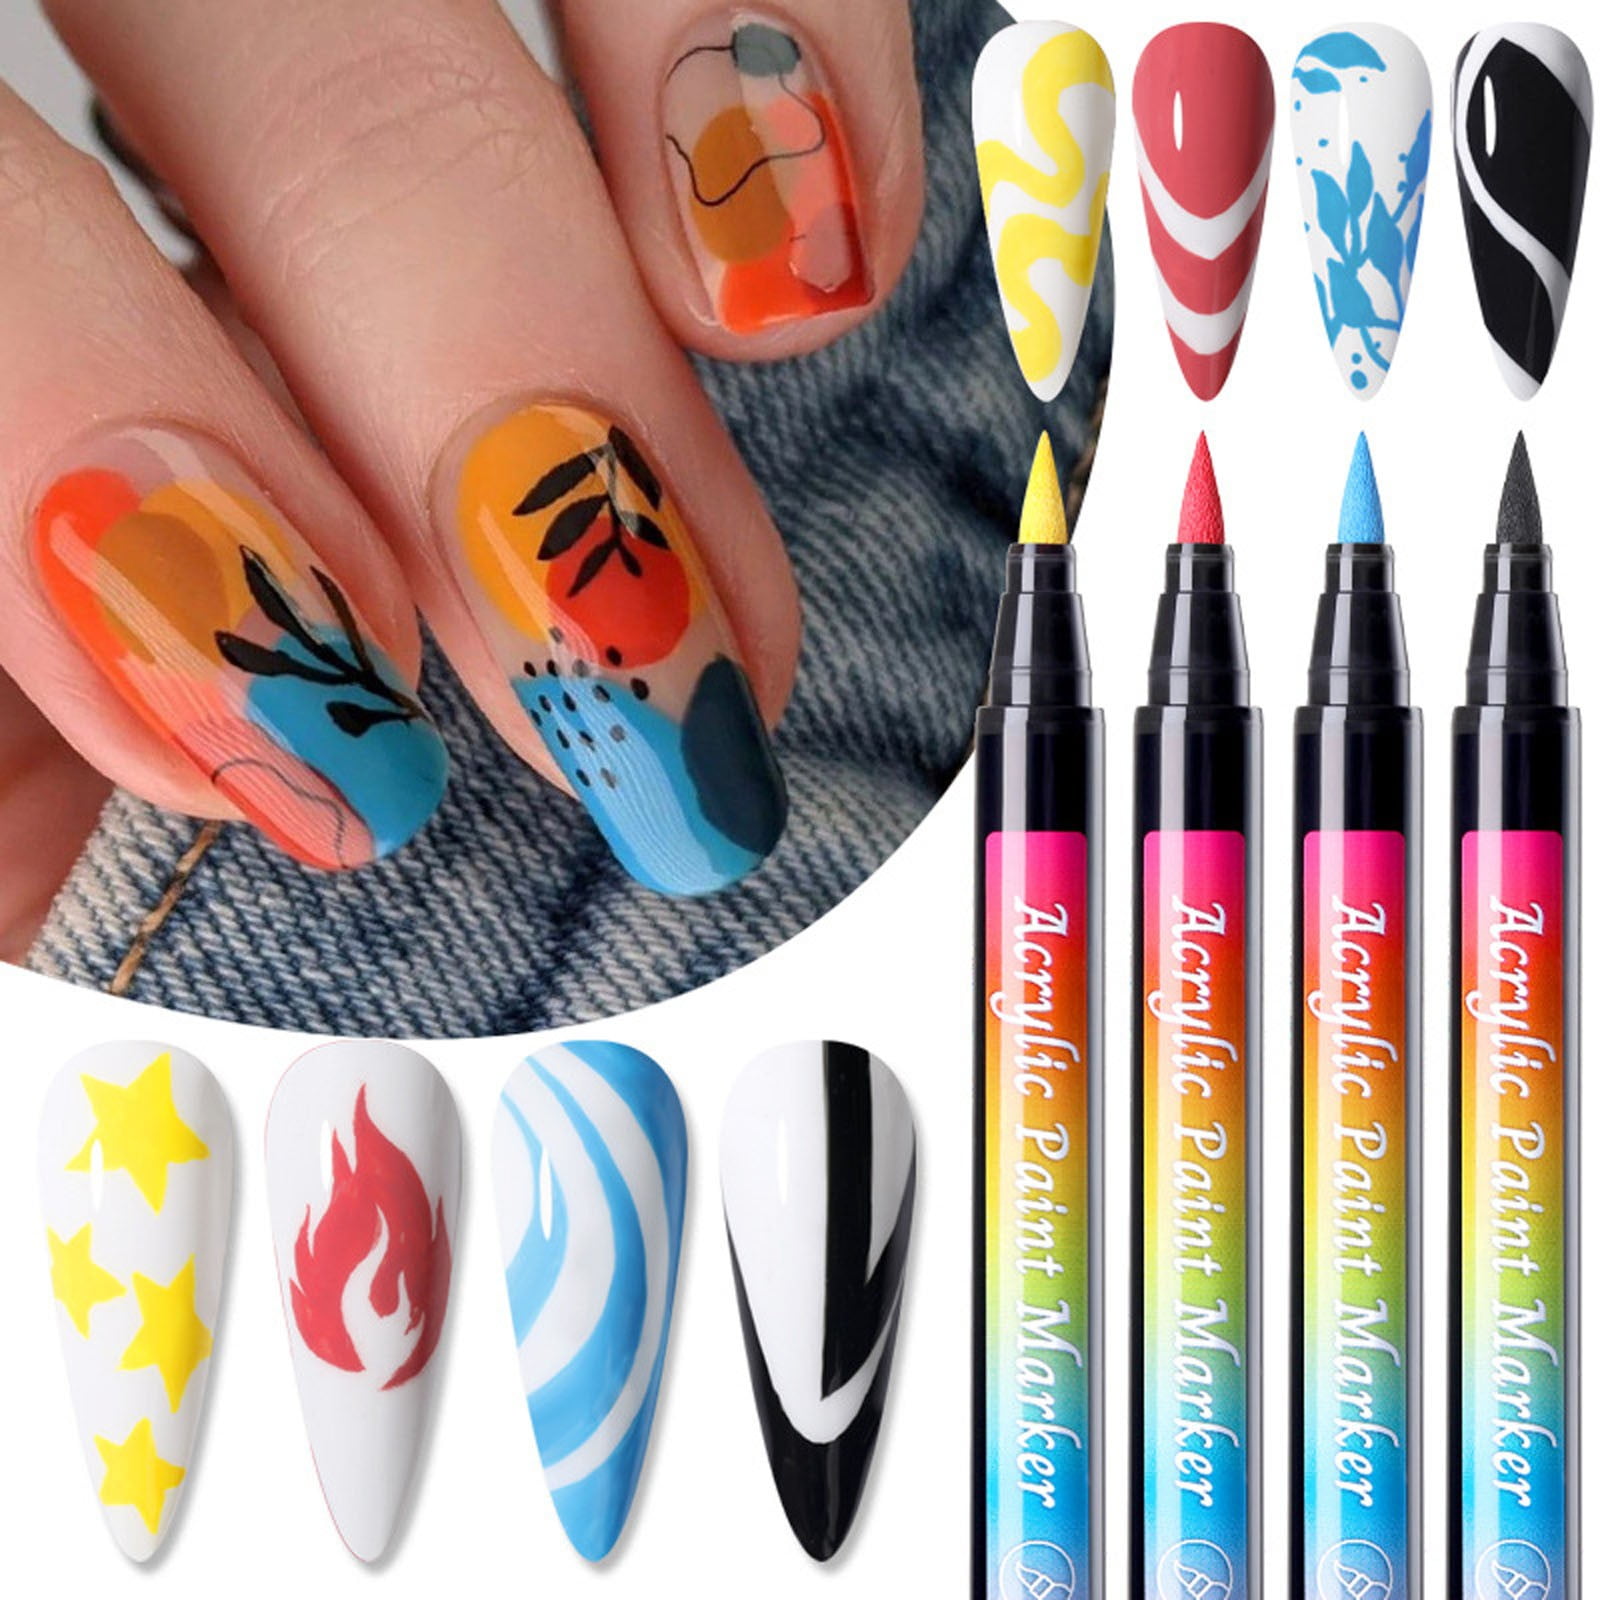 UIJKMN 12 Colors Ultra Thin Curve Manicure Marker, Gel Nail Art